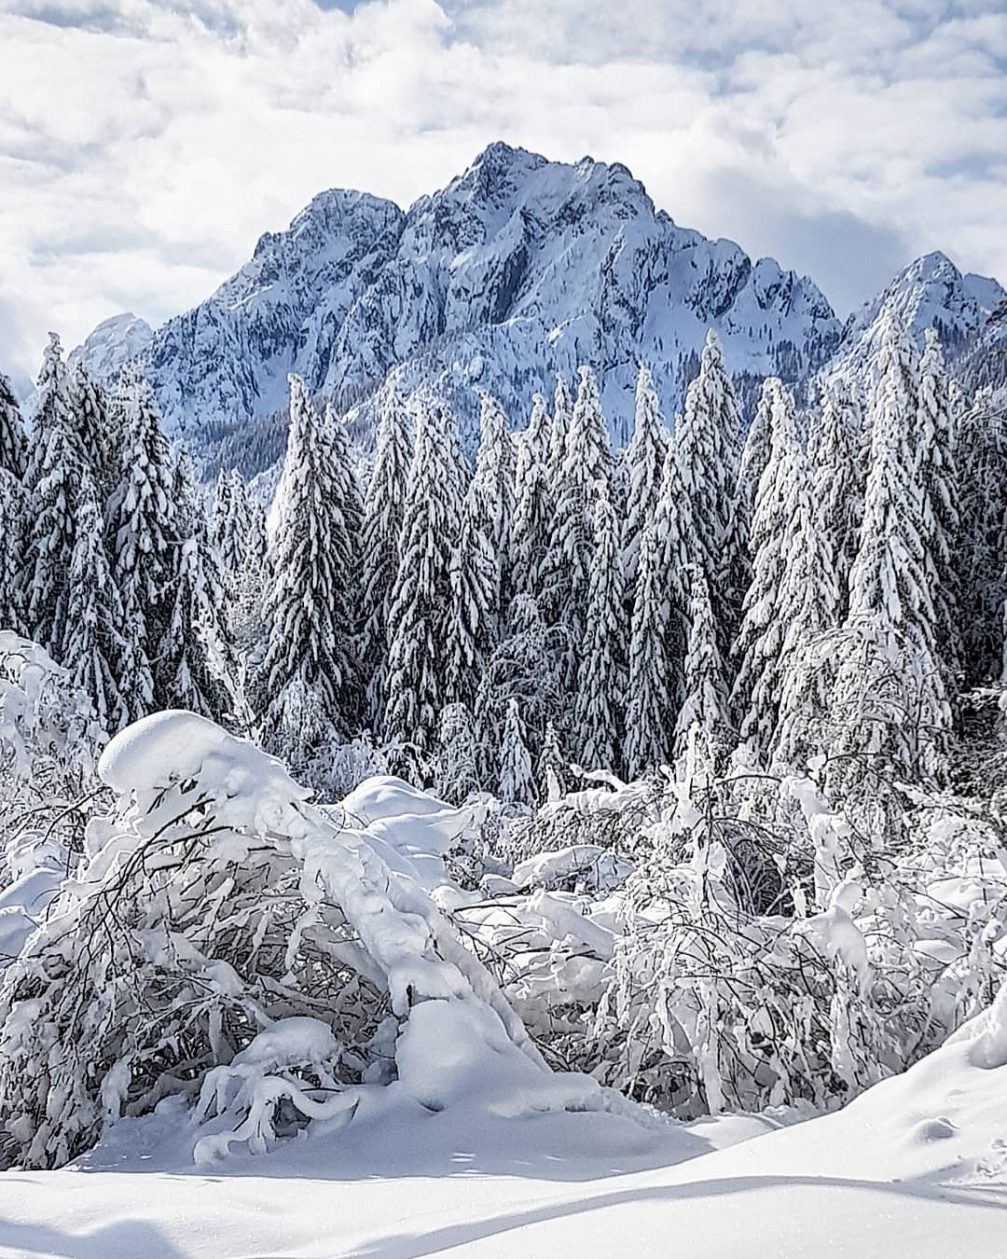 Julian Alps in Slovenia covered in snow